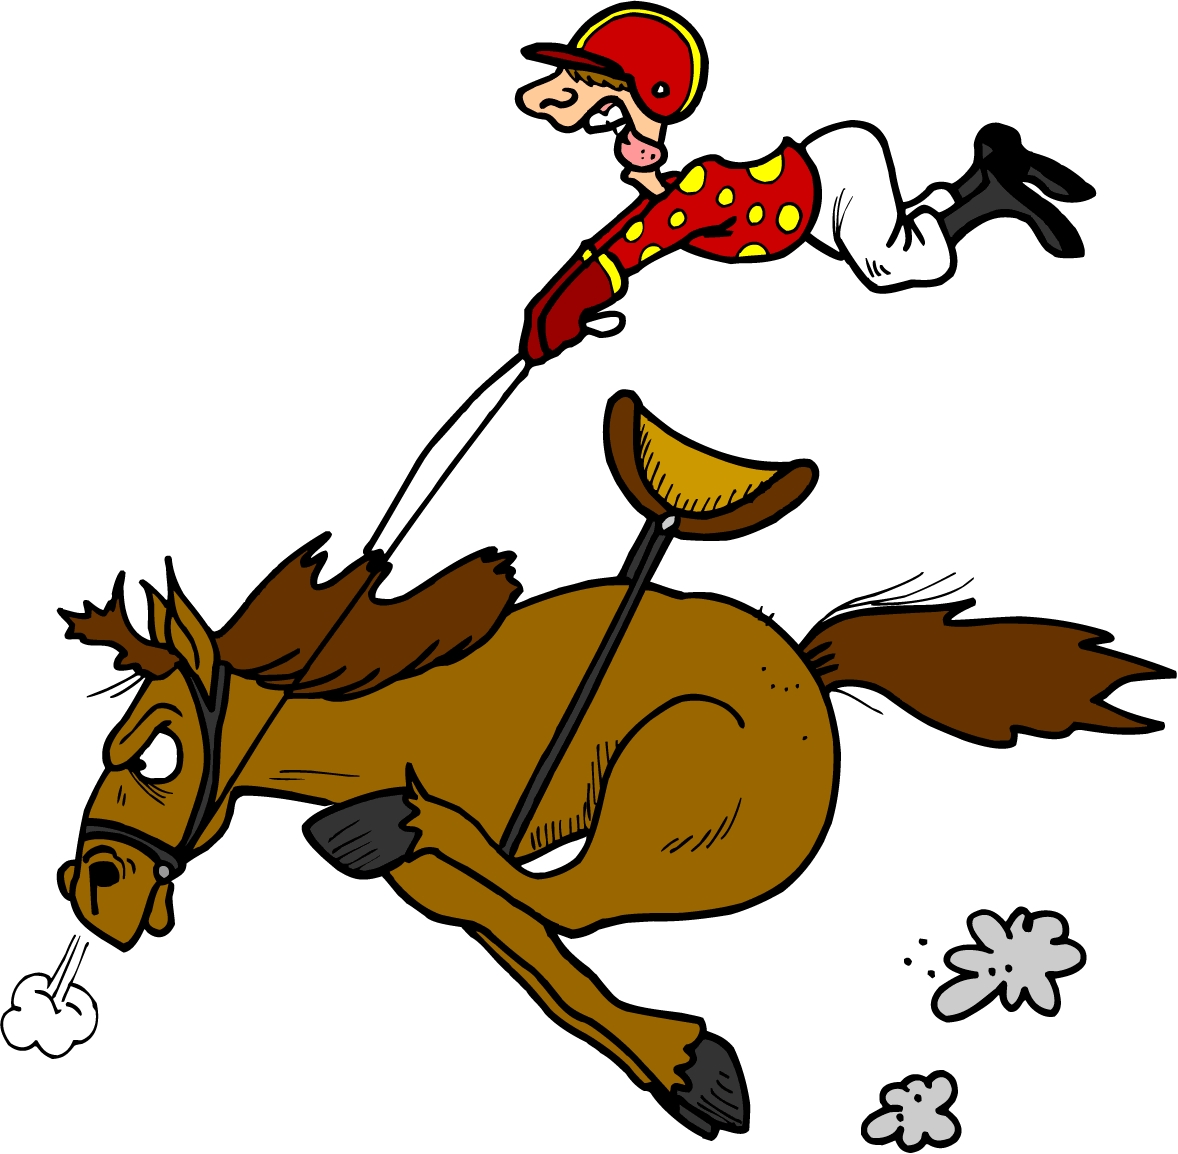 ... horse racing clip art. ra